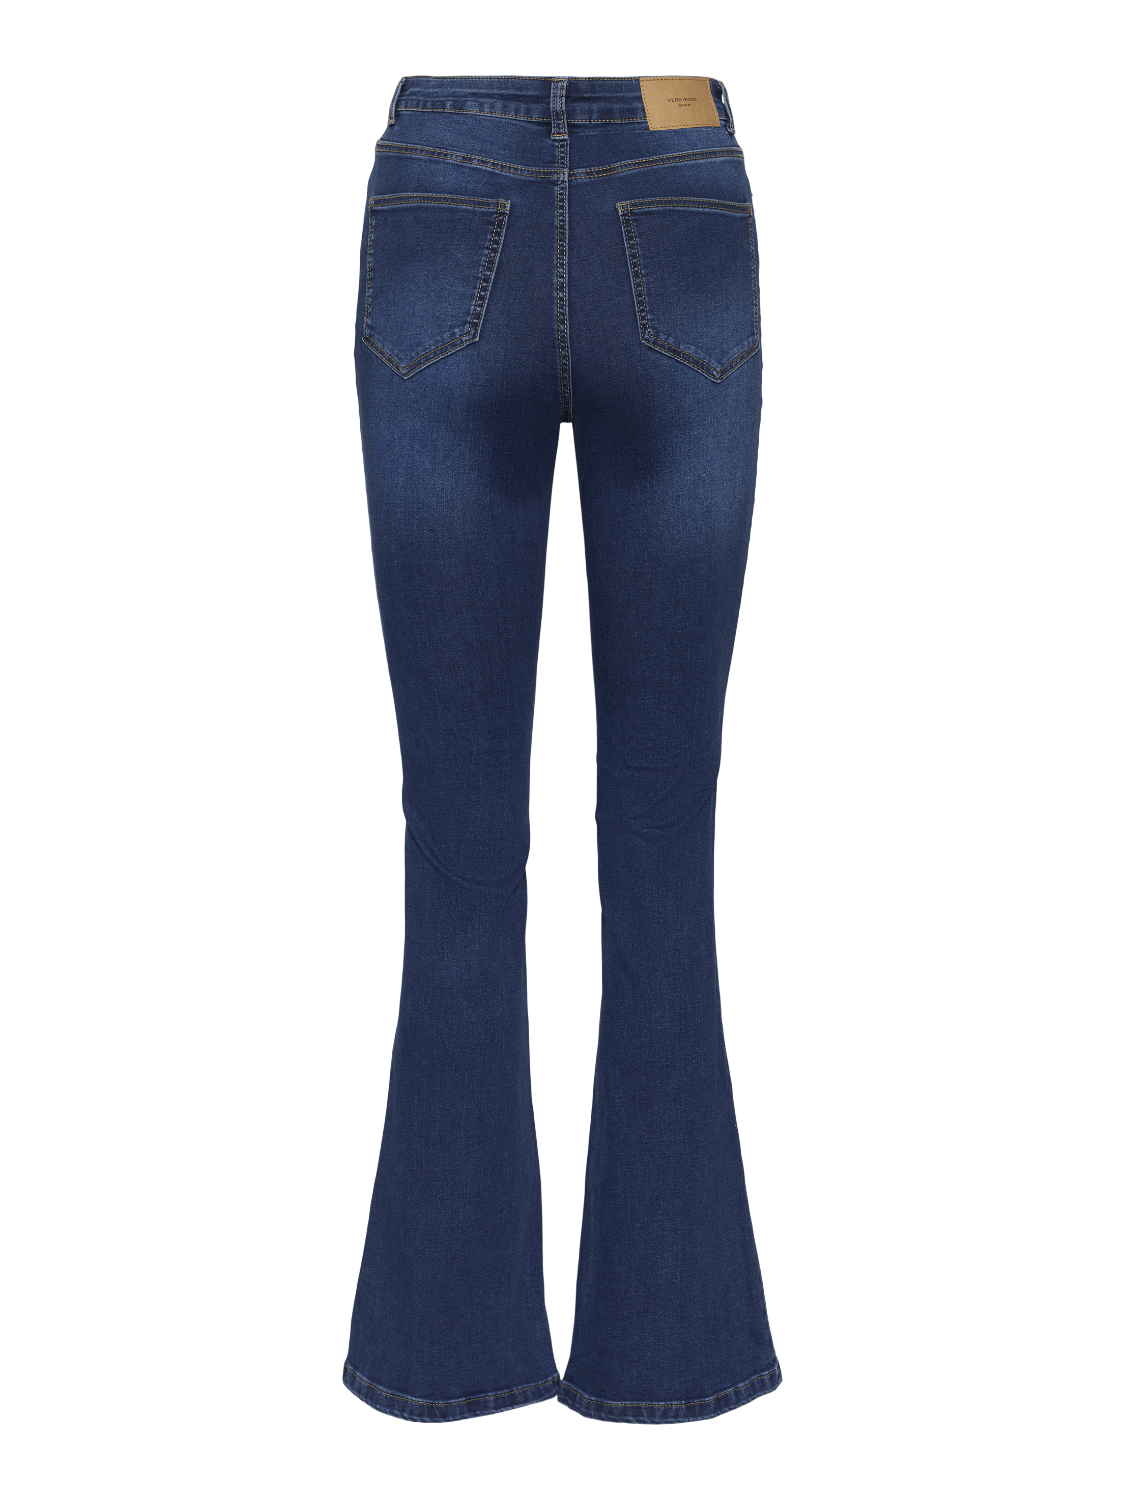 VMSIGA Jeans - Dark Blue Denim